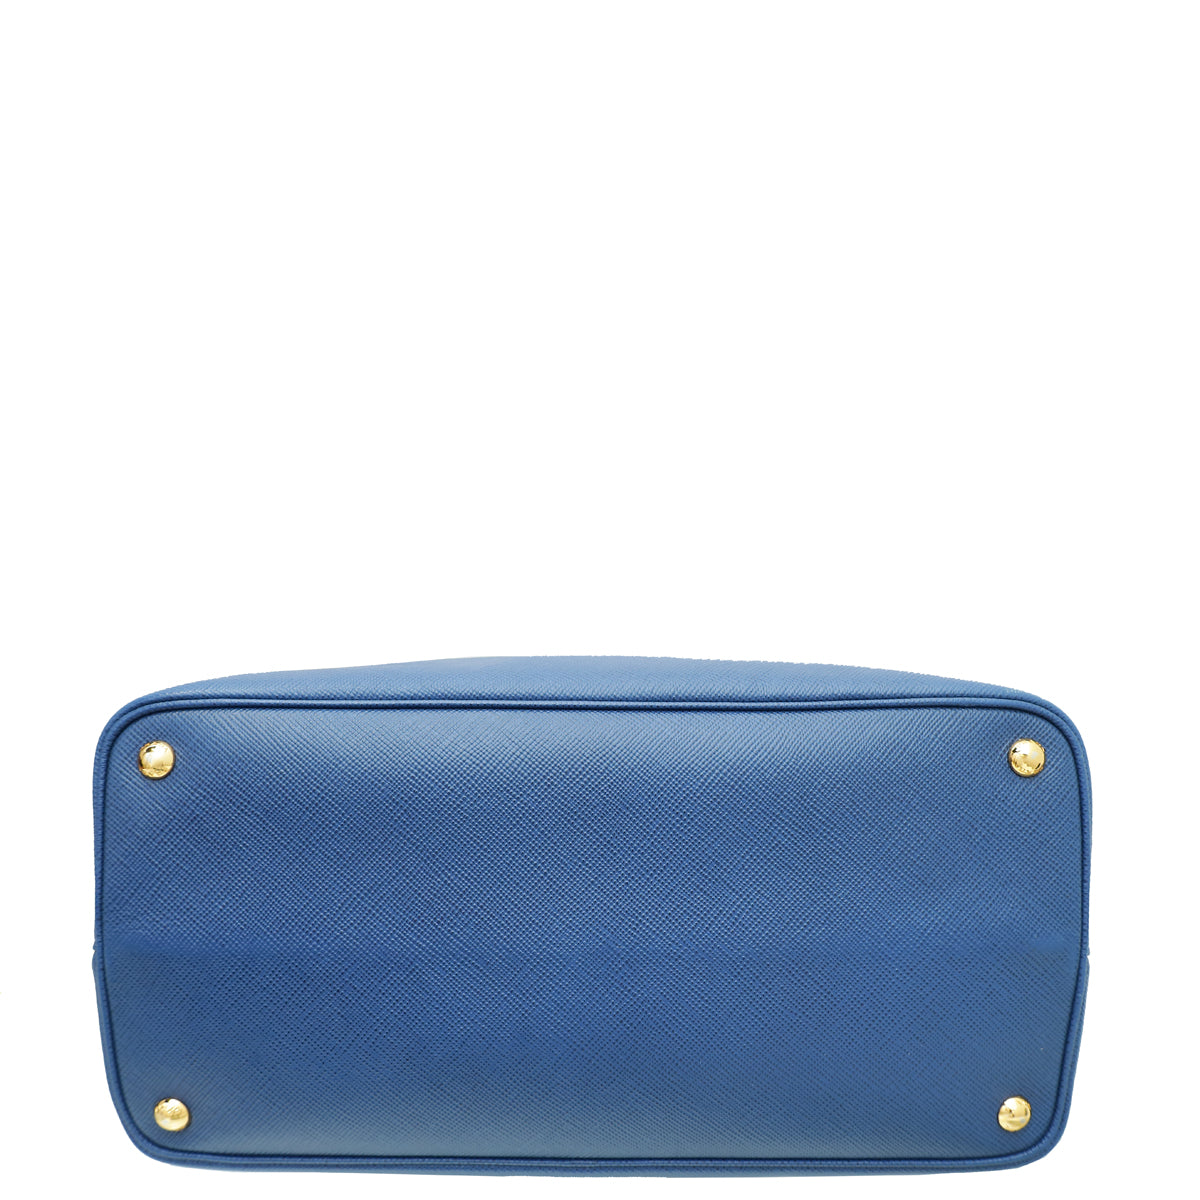 Prada Bluette Cuir Double Handle Large Bag